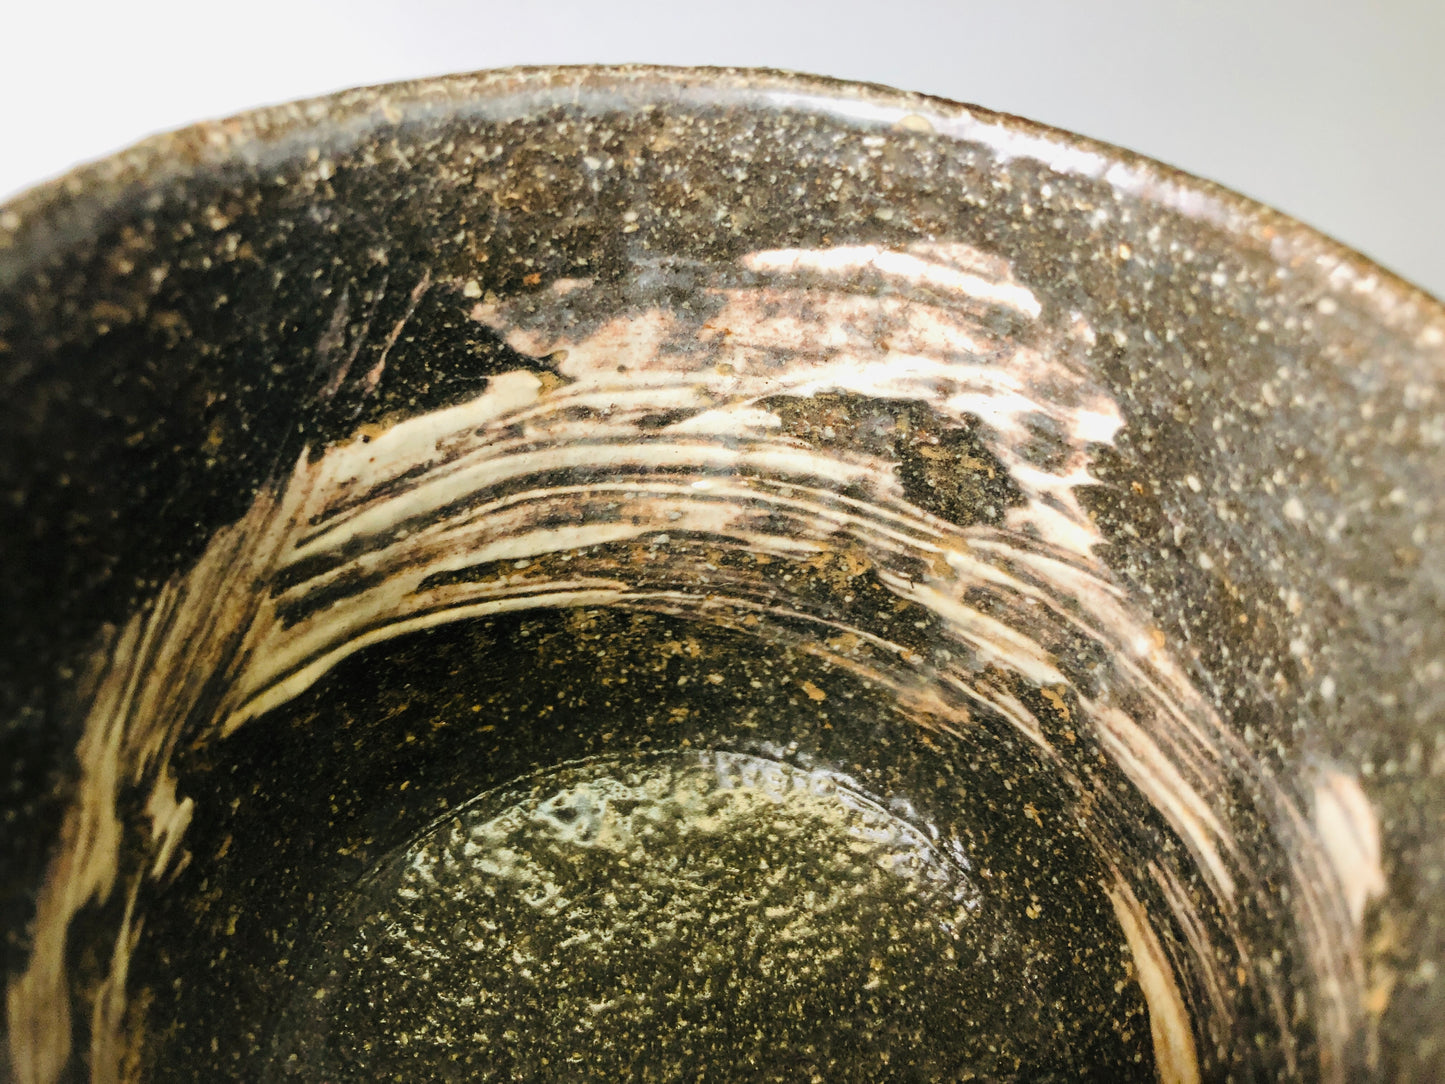 Y6048 [VIDEO] CHAWAN Mishima-ware tube crane Japan antique tea ceremony vintage pottery